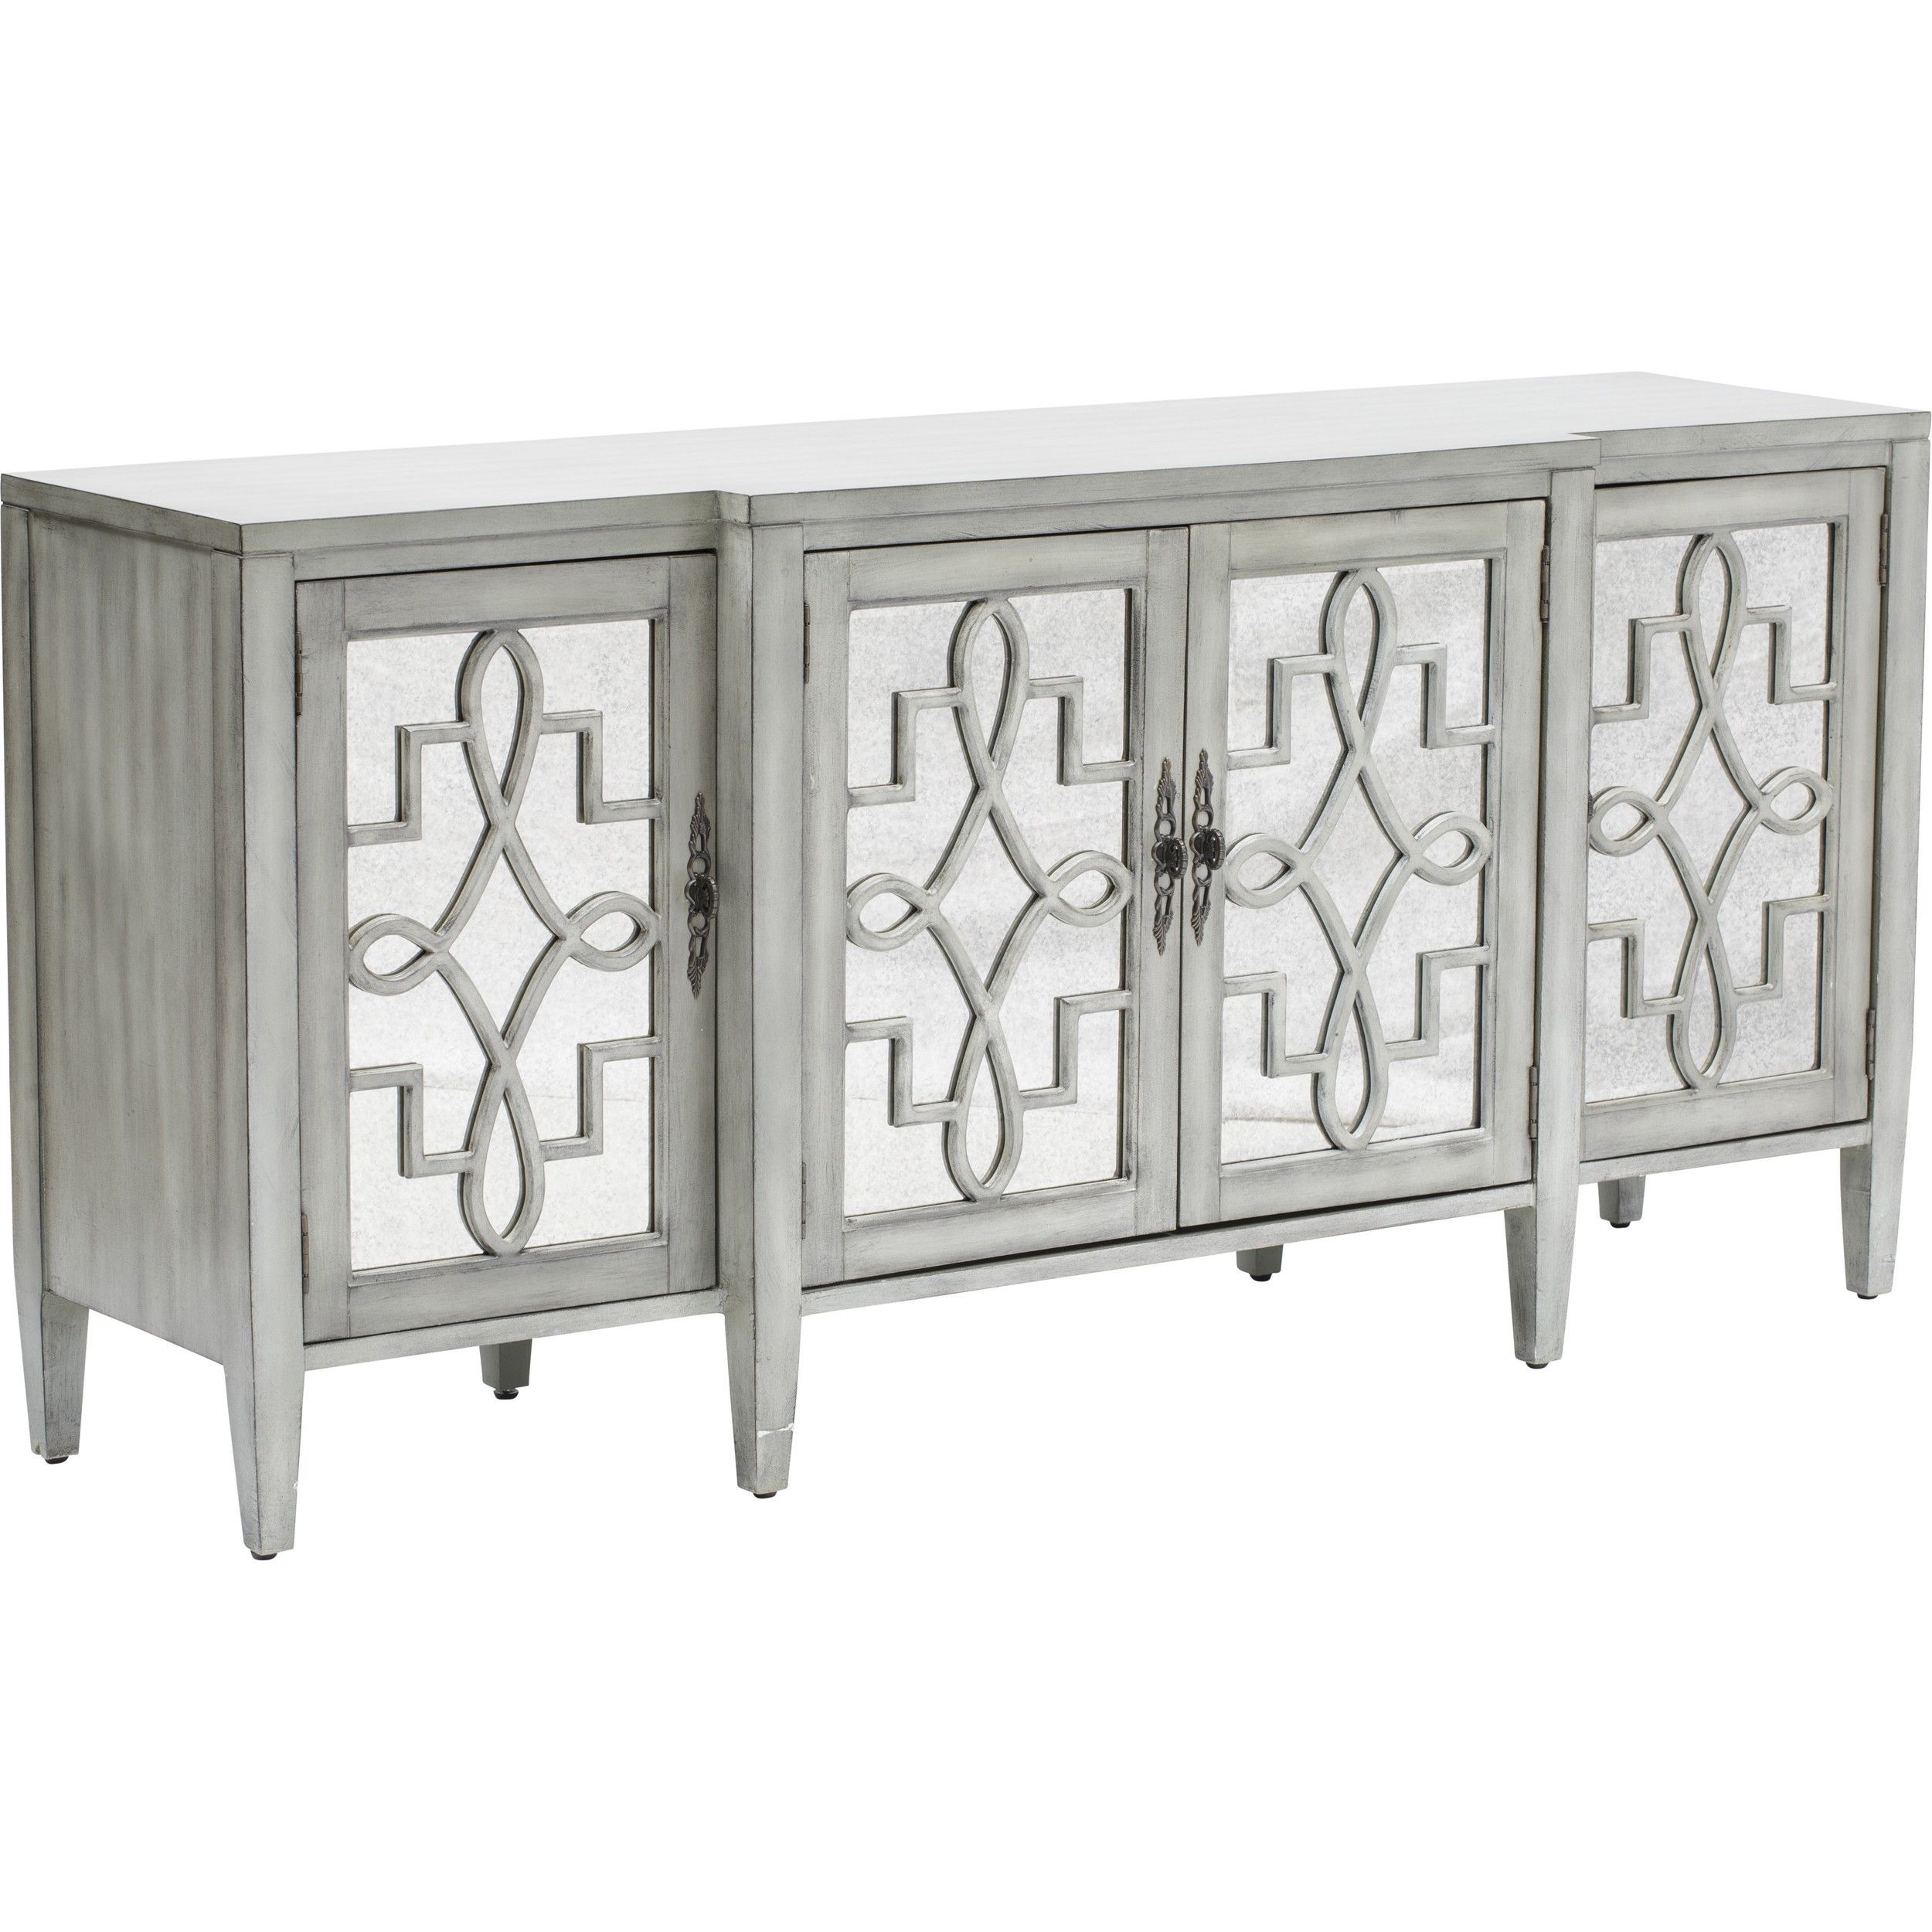 Credenza 4 Door Mirror Facing, Grey – Furniture – Storage Regarding Wood Accent Sideboards Buffet Serving Storage Cabinet With 4 Framed Glass Doors (View 3 of 15)